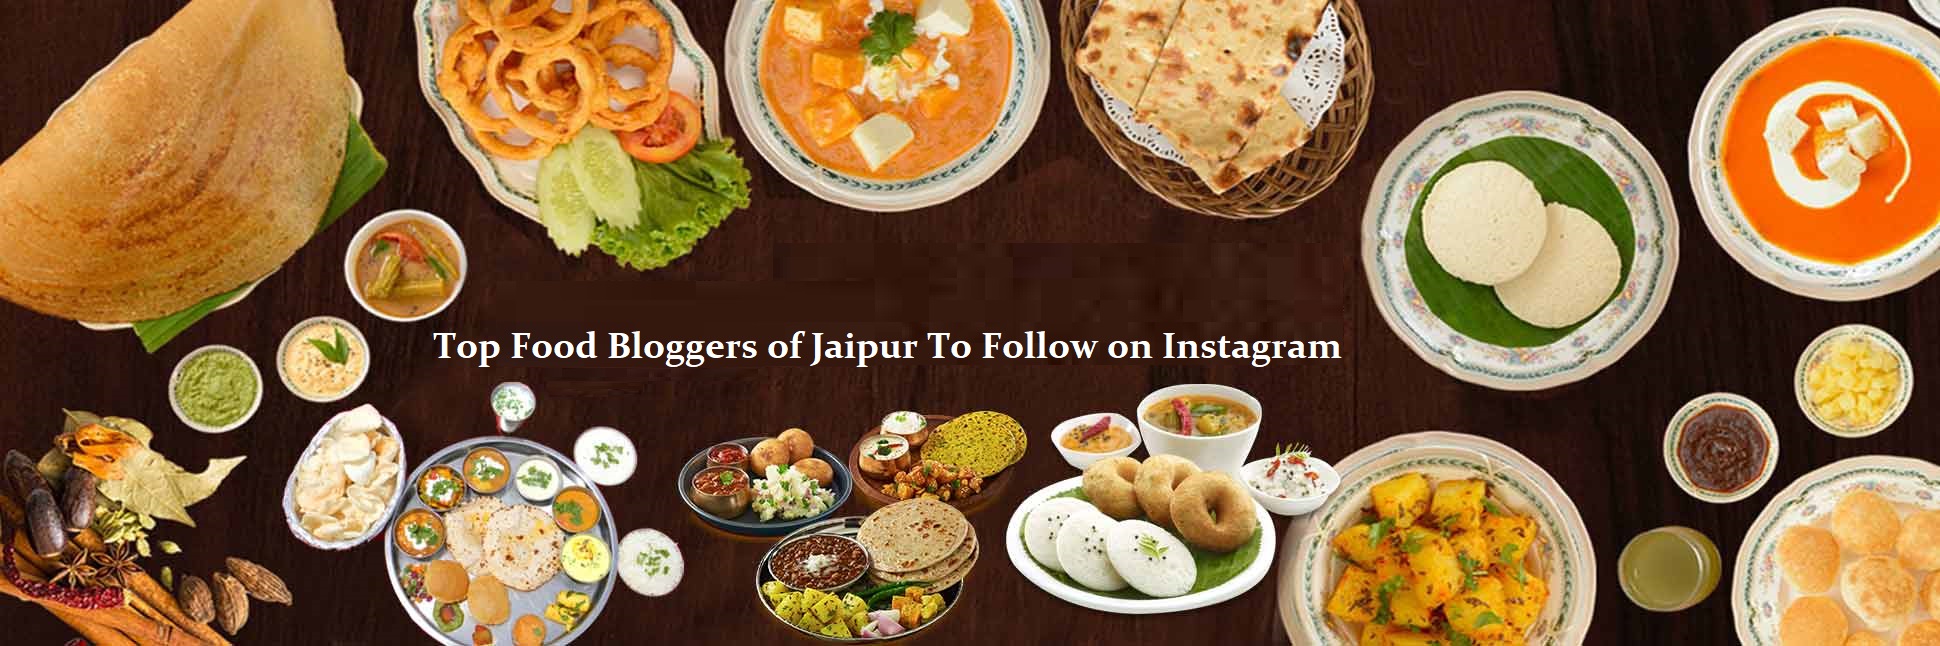 food bloggers in jaipur - Digi Web Art